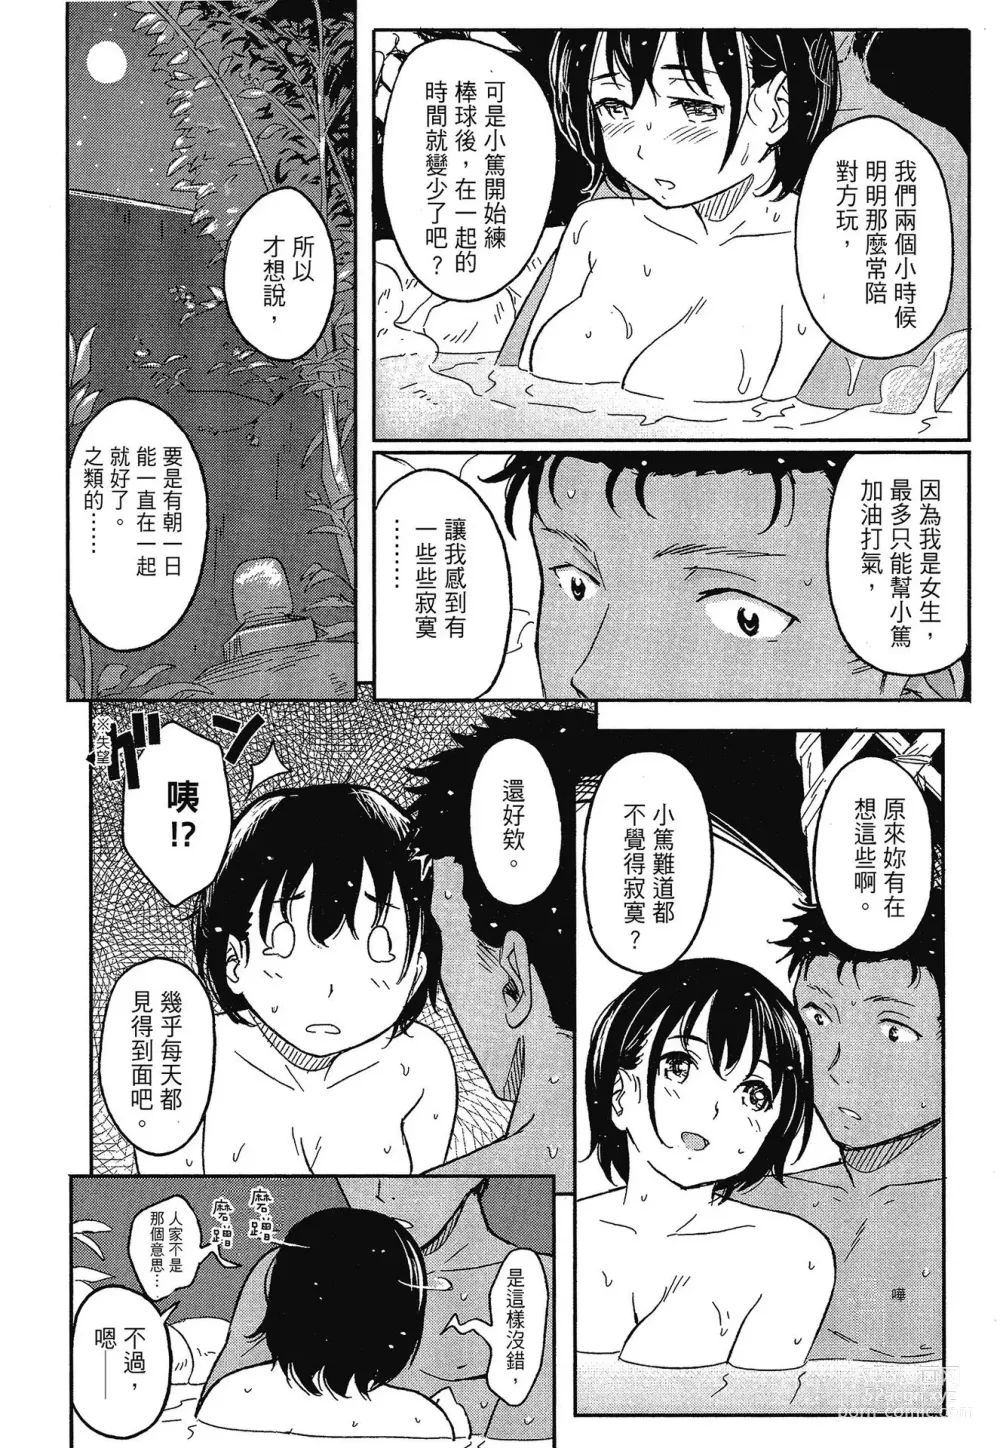 Page 206 of manga 特別的每一天 (decensored)